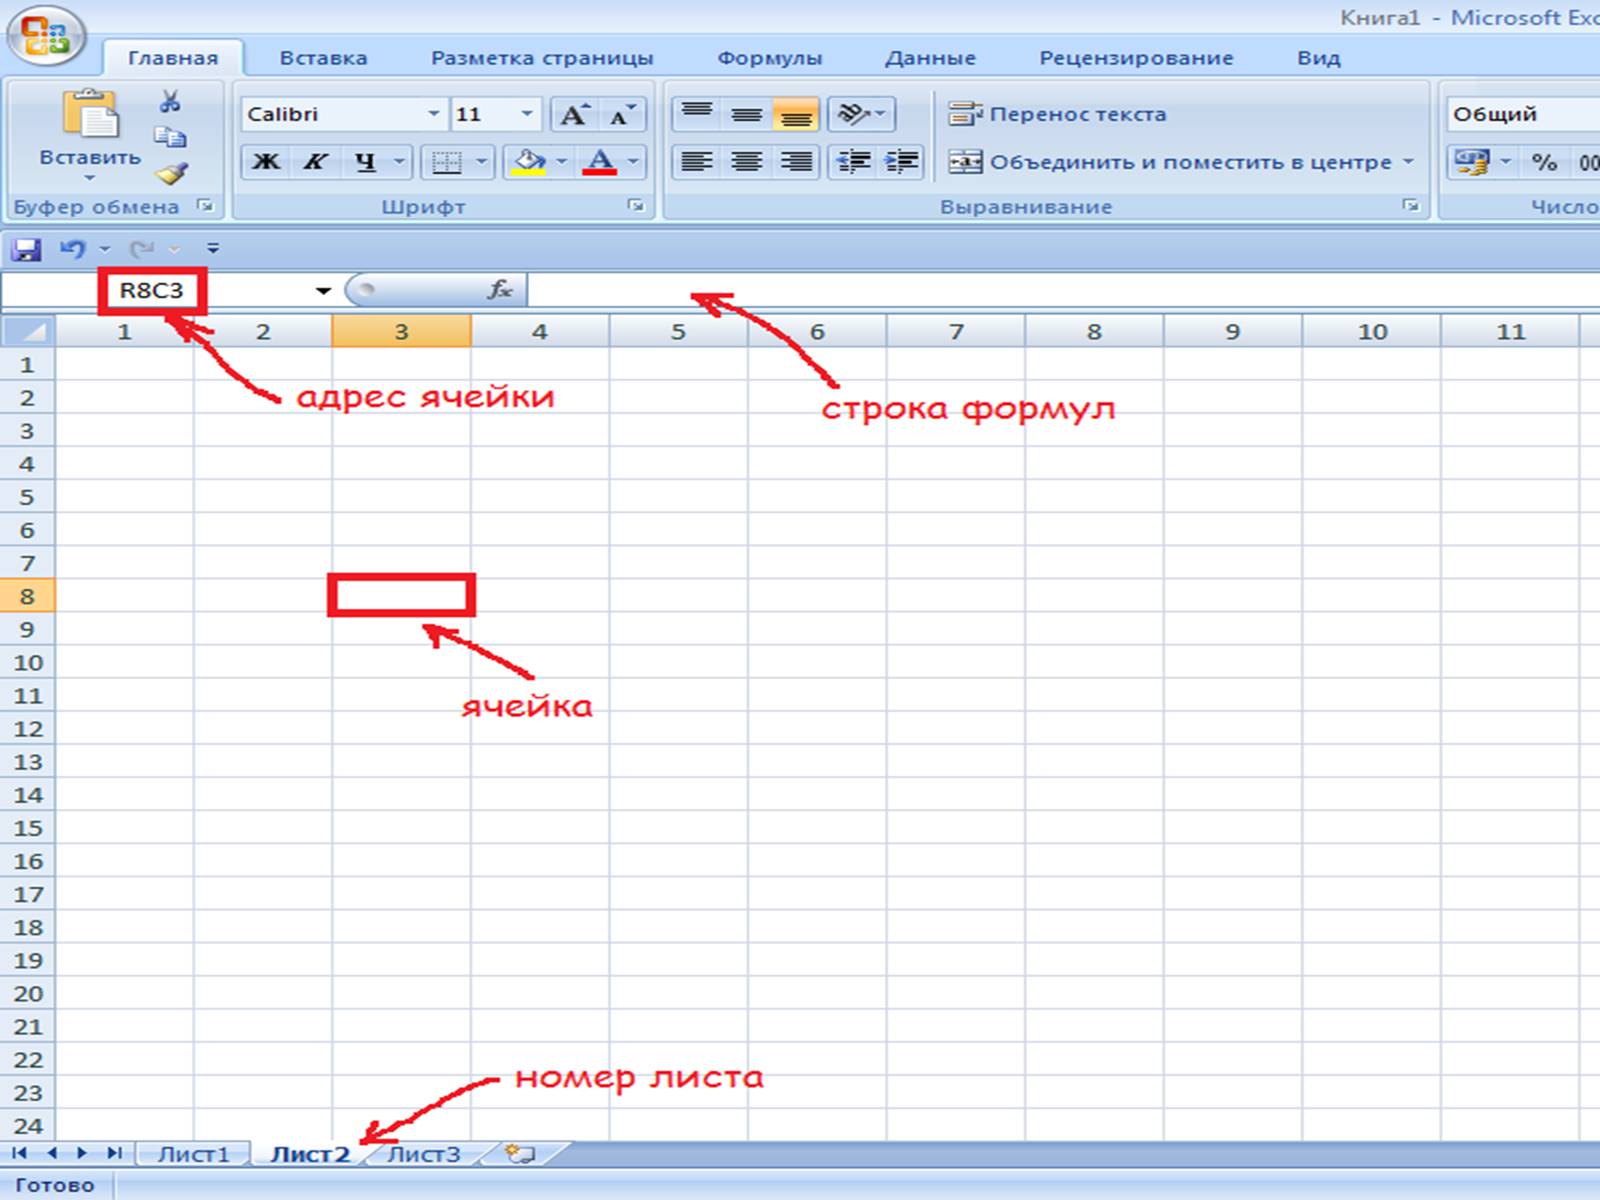 Презентація на тему «Общие сведения о Microsoft Excel» - Слайд #12